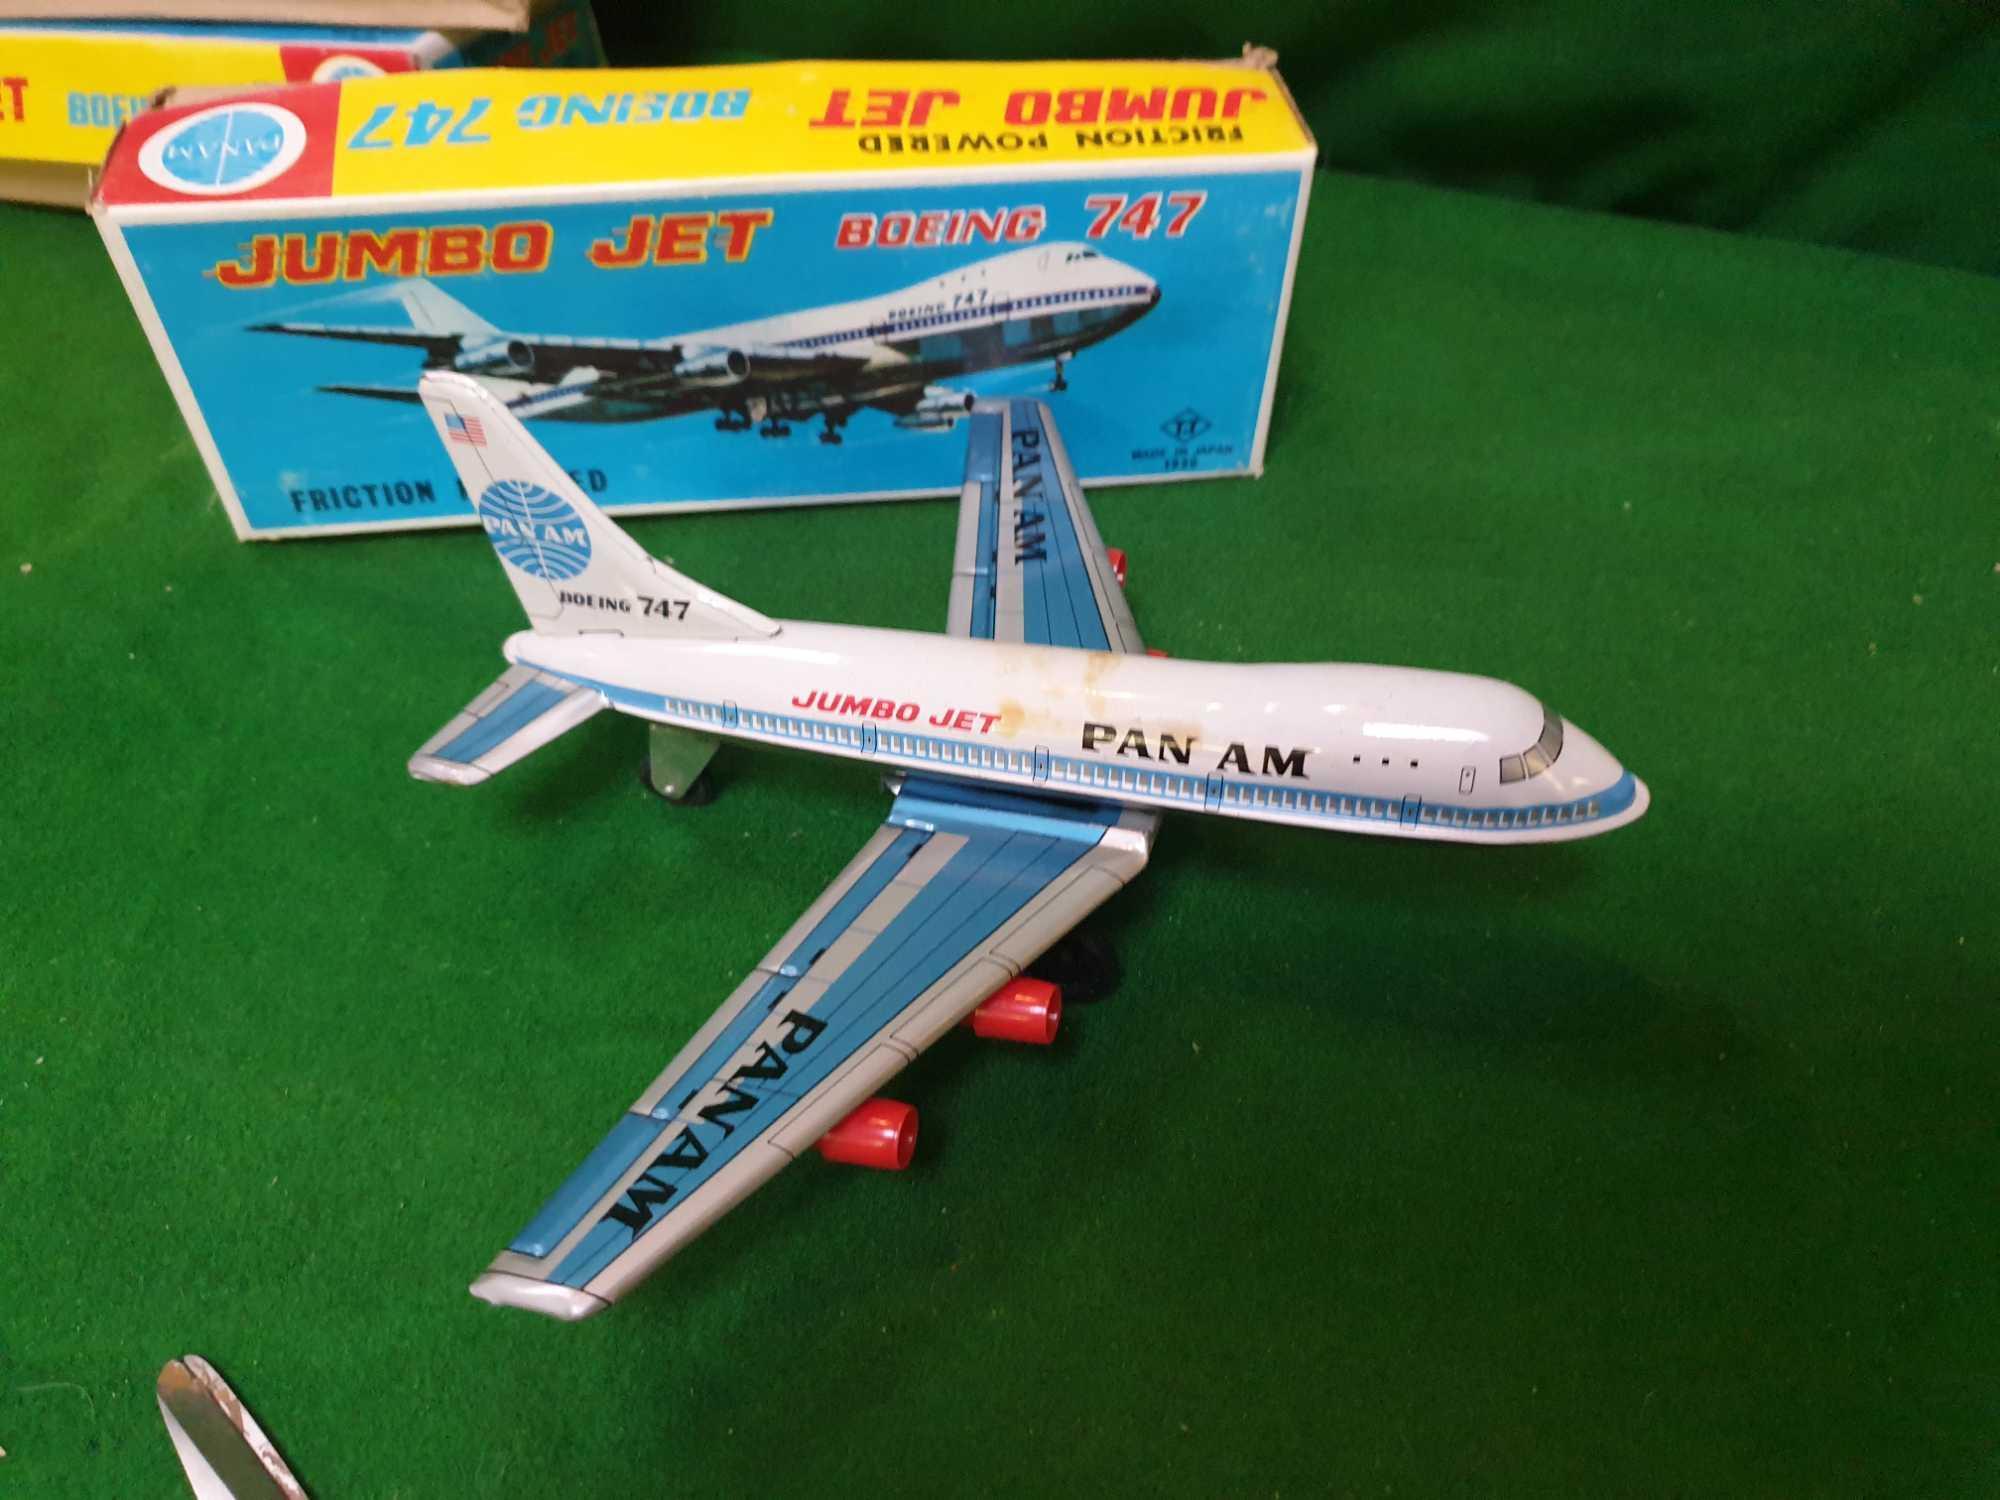 TT Takatoku Toys Japan Jumbo Jet Boeing 747 Friction Toy Plane Pan AM Decals - Image 3 of 4